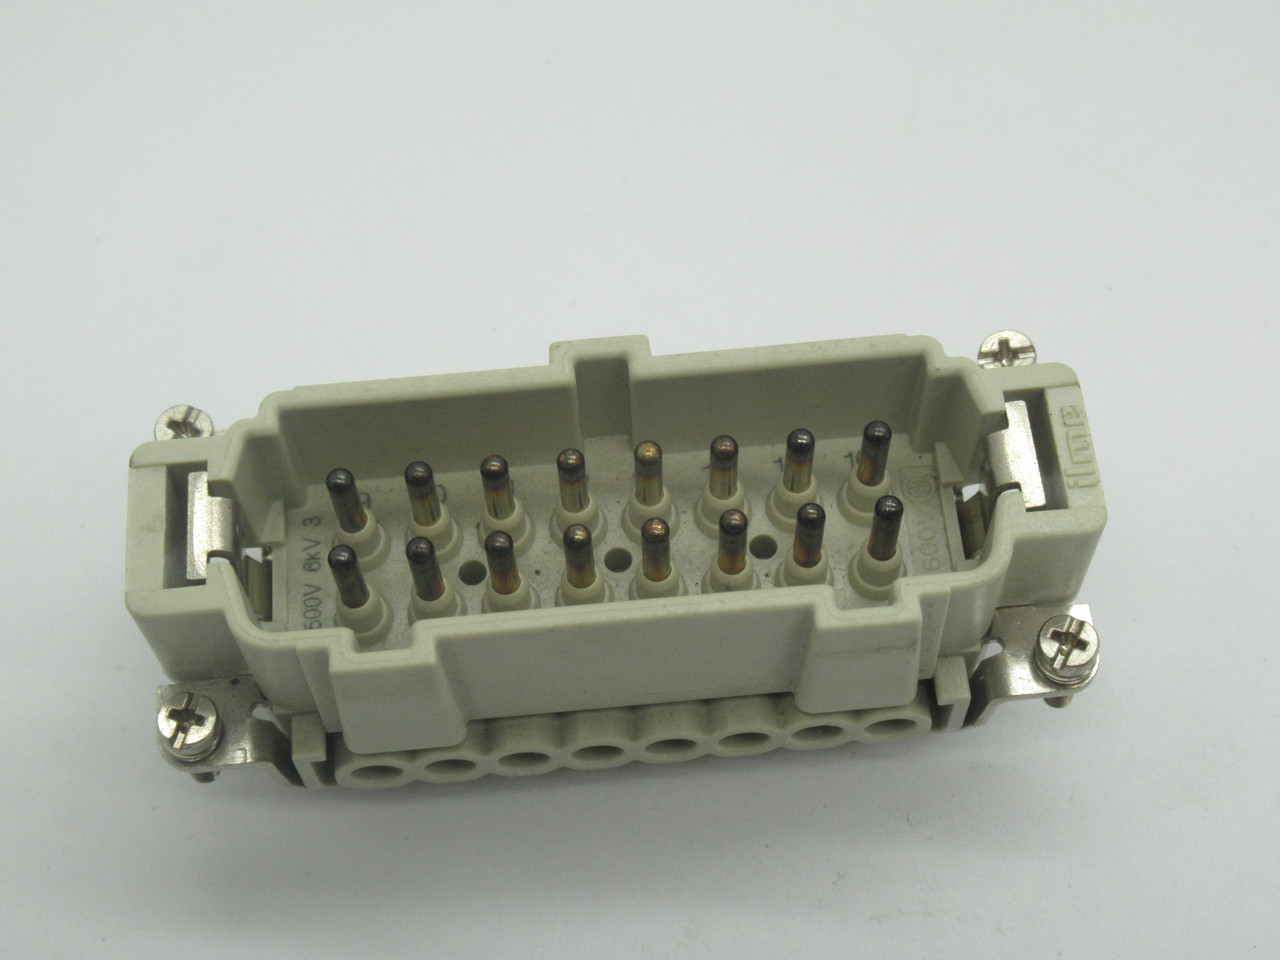 ILME CNEM-16-T Connector Male 16-Pin 500V 16A 6kV USED